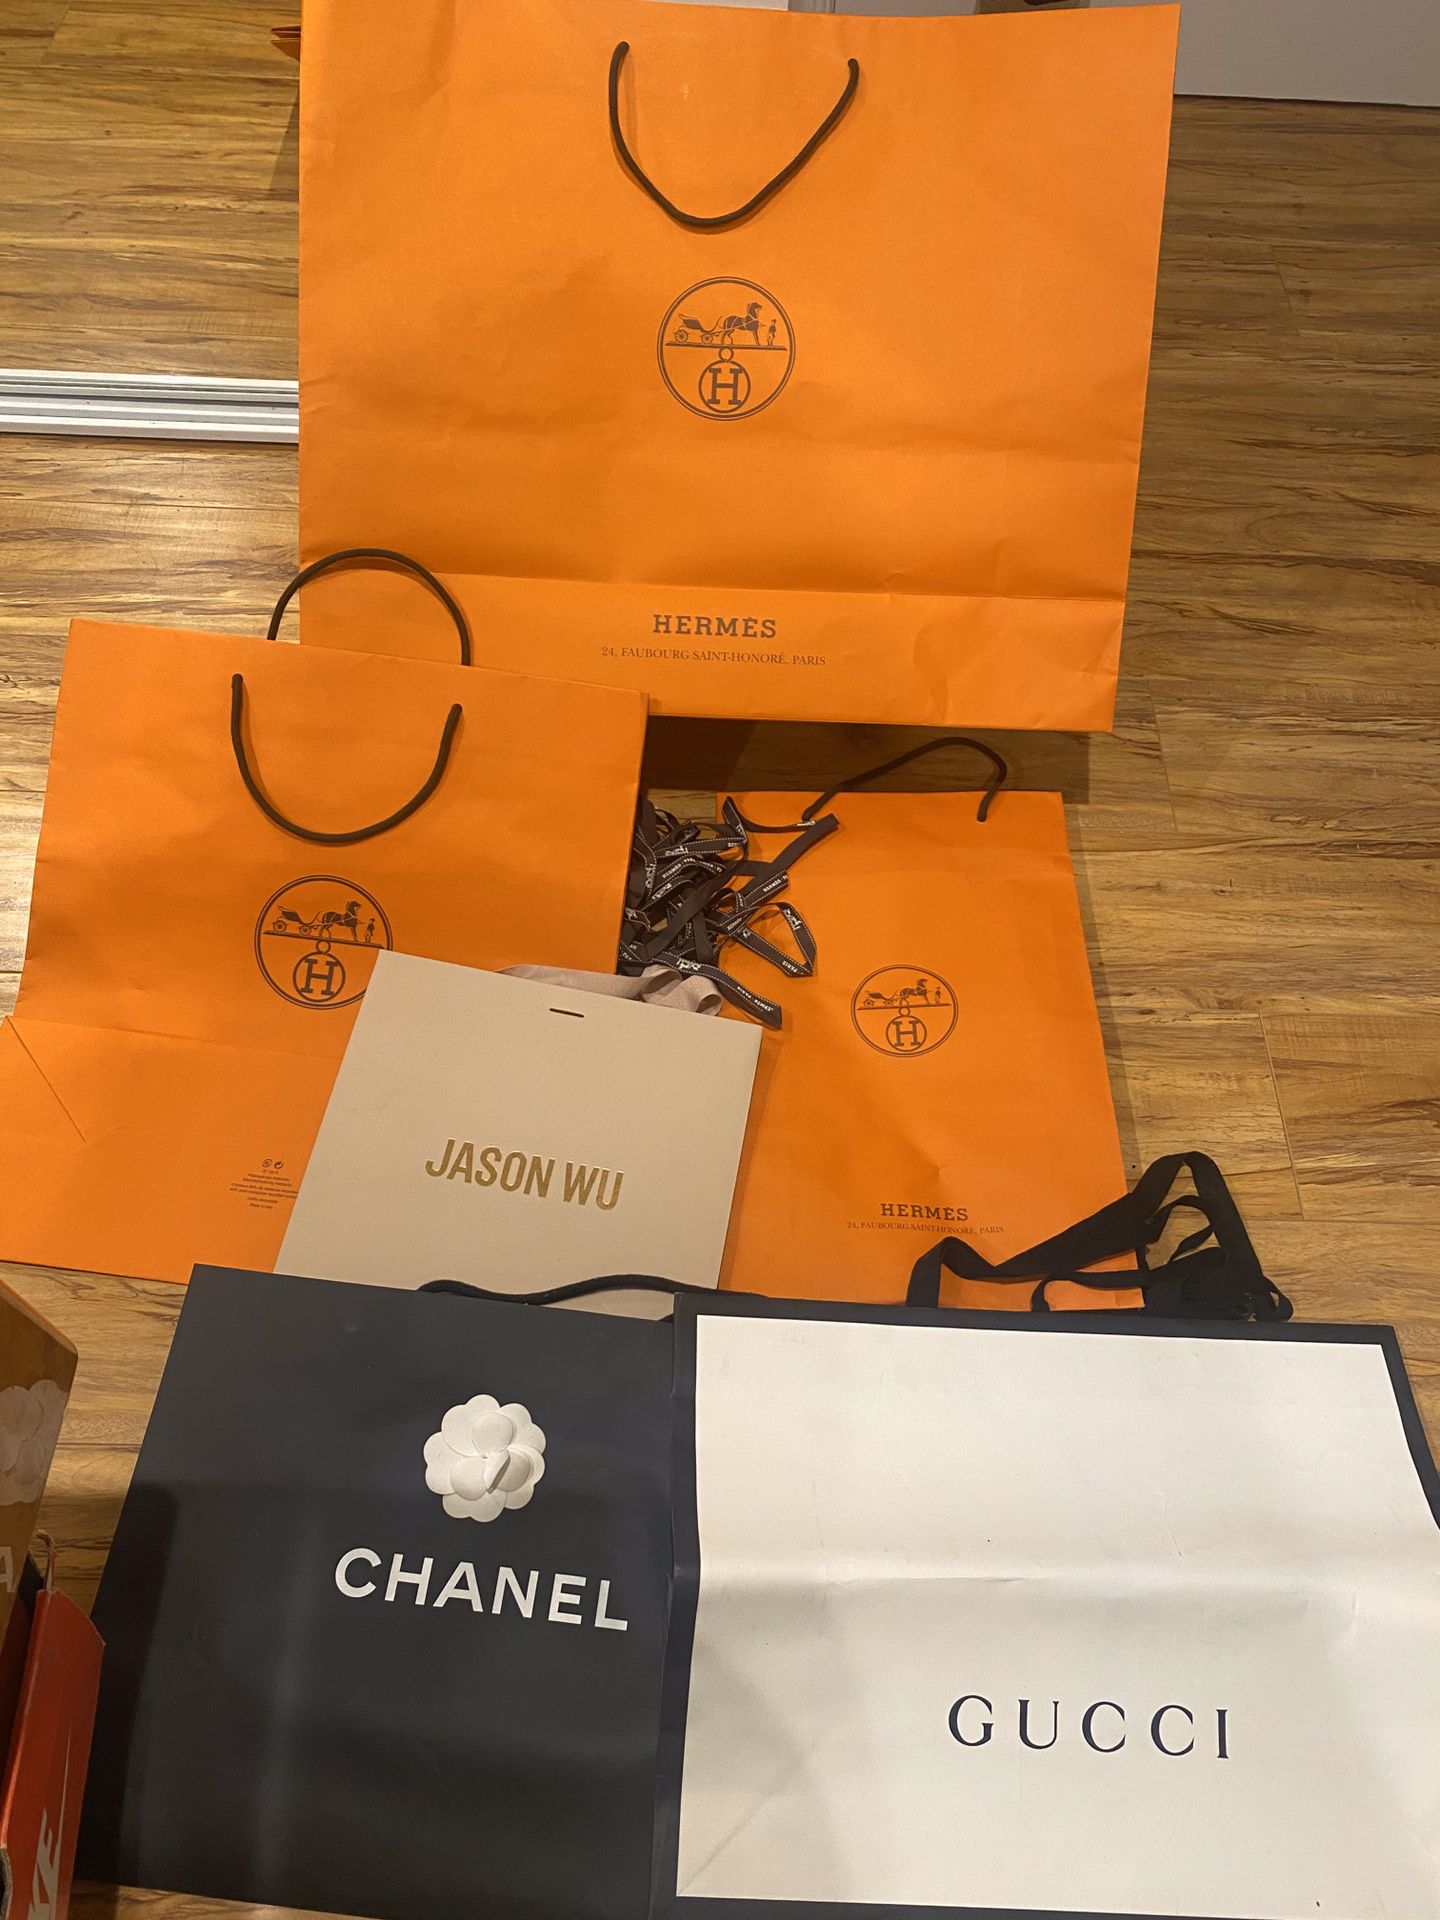 Chanel Empty Gucci bag, Jason WU, Hermès bag